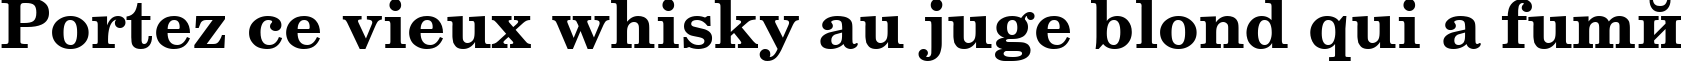 Пример написания шрифтом AGNewHandbook Bold текста на французском